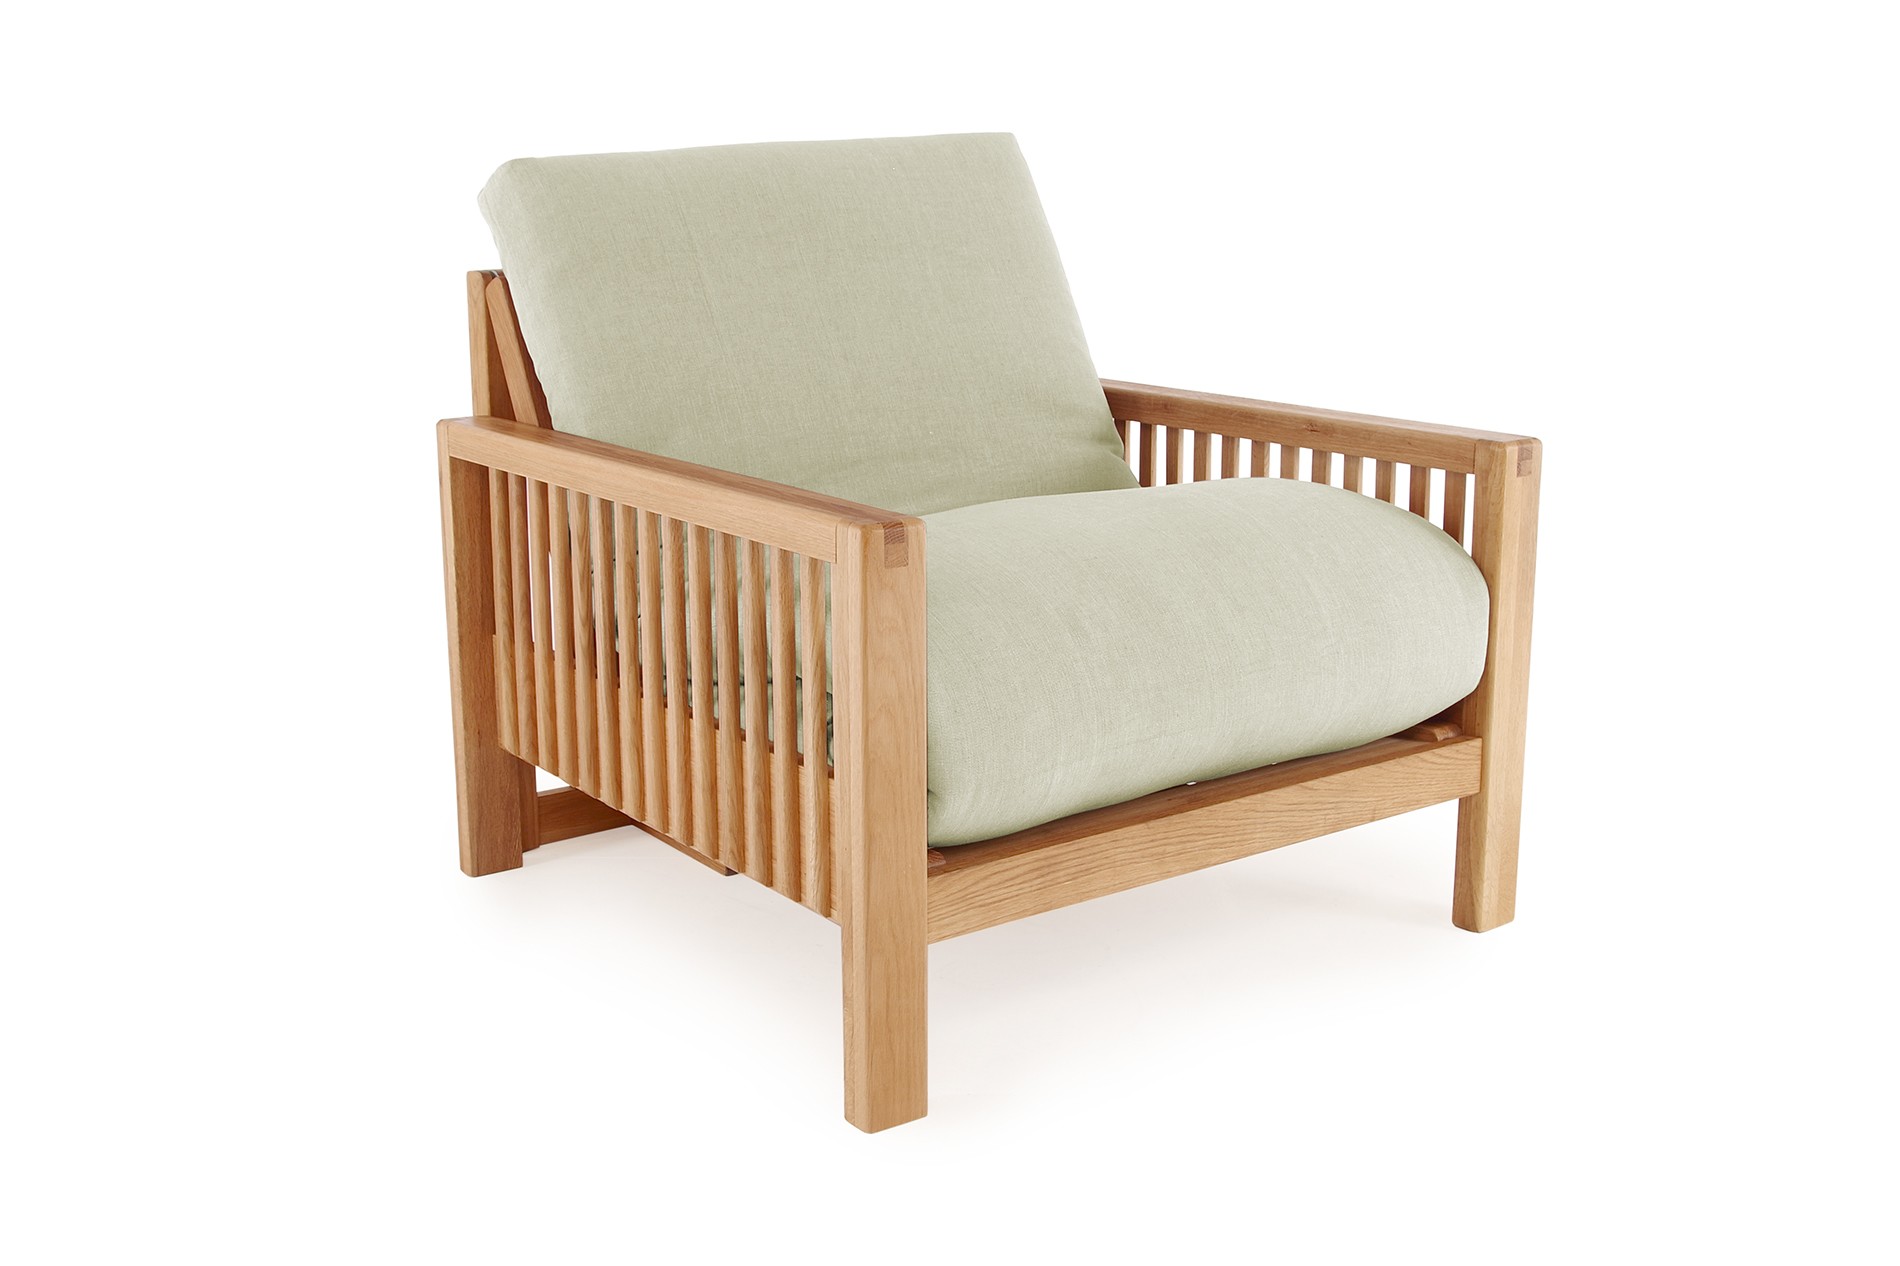 Oak Rondo Seat Sofa Bed Handloom Natural Cotton